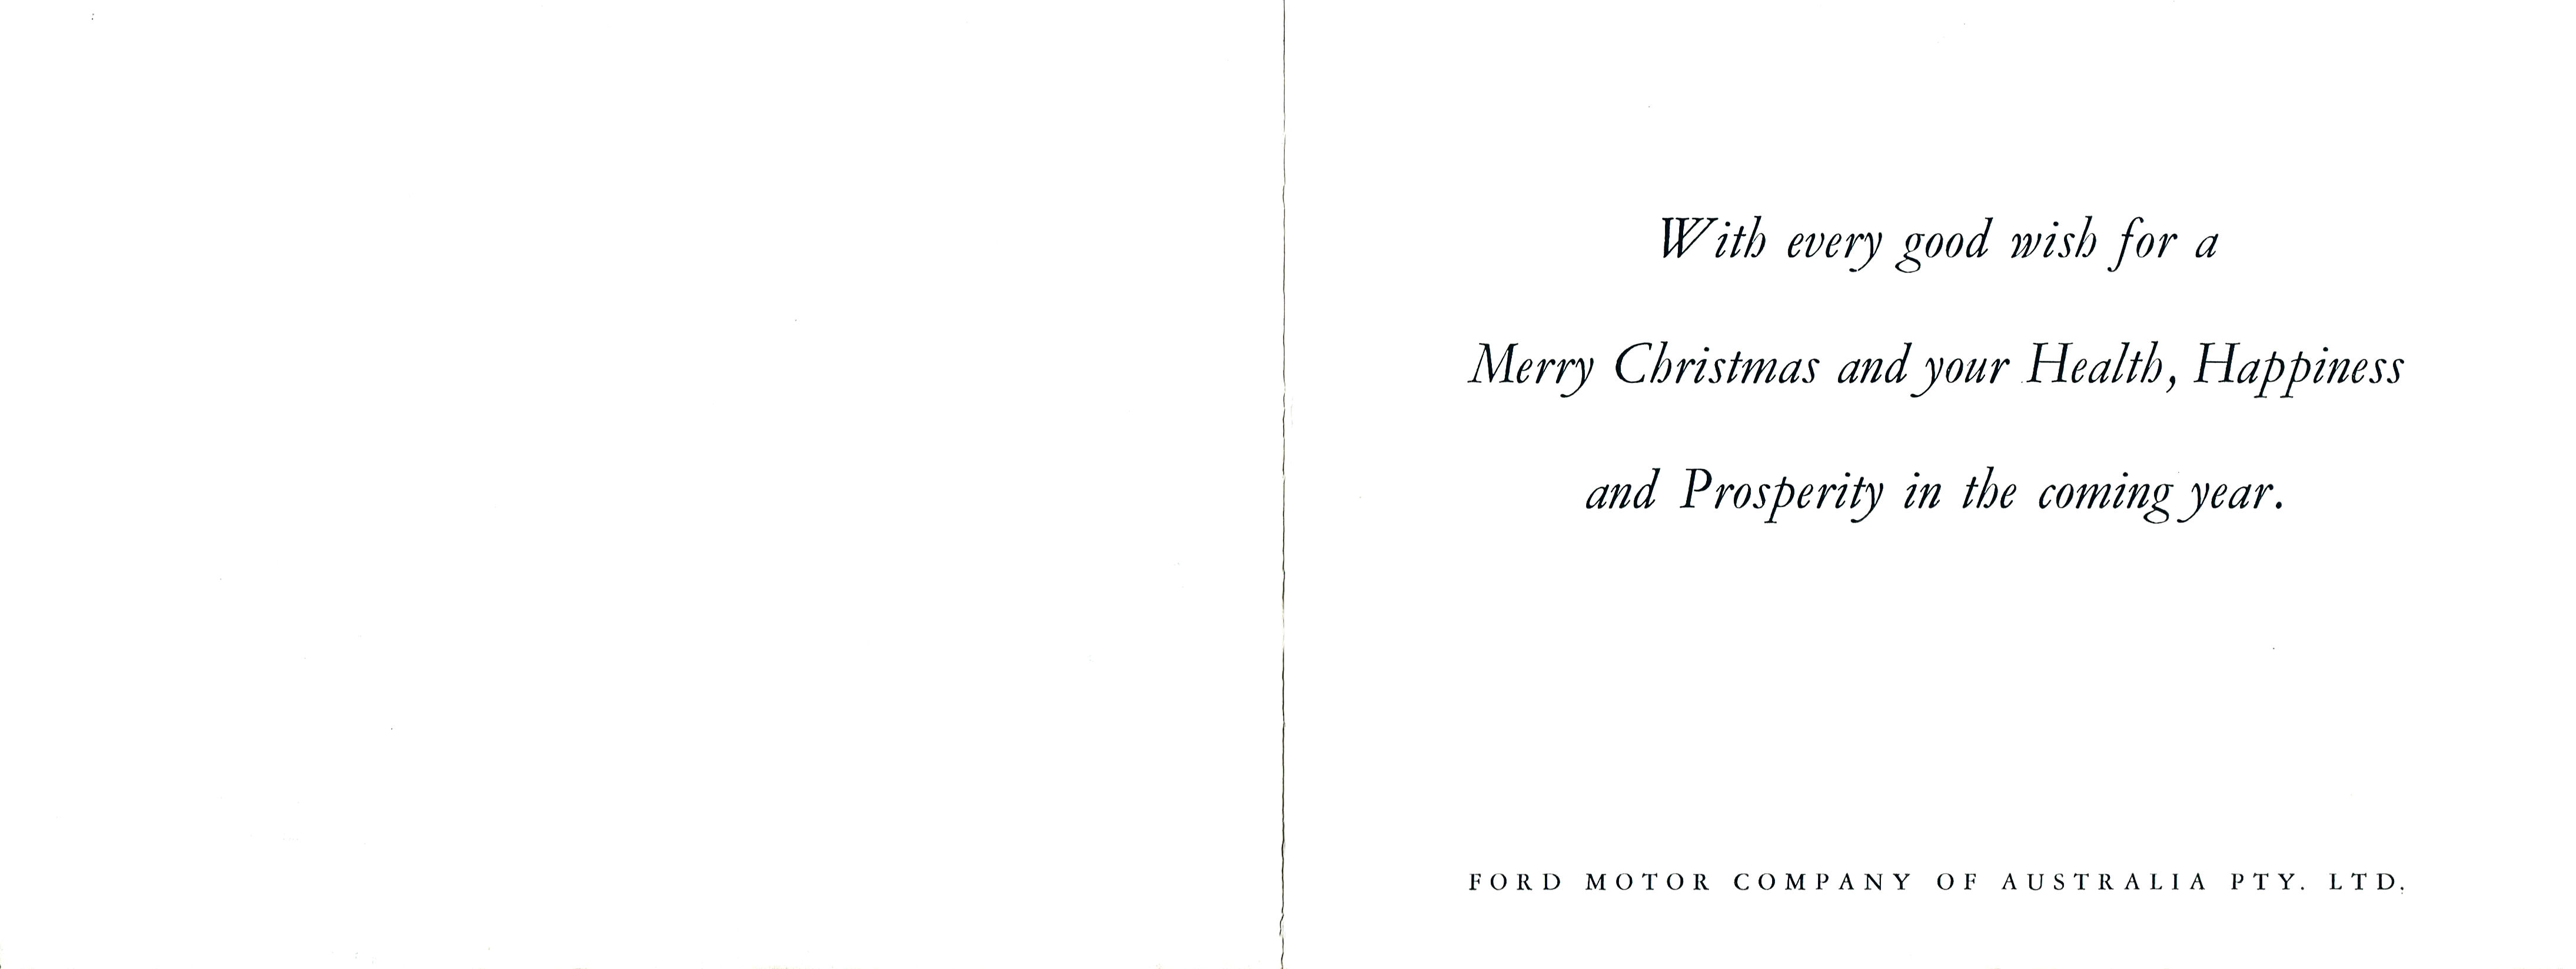 1962 Ford Christmas Card (Aus)-02-03